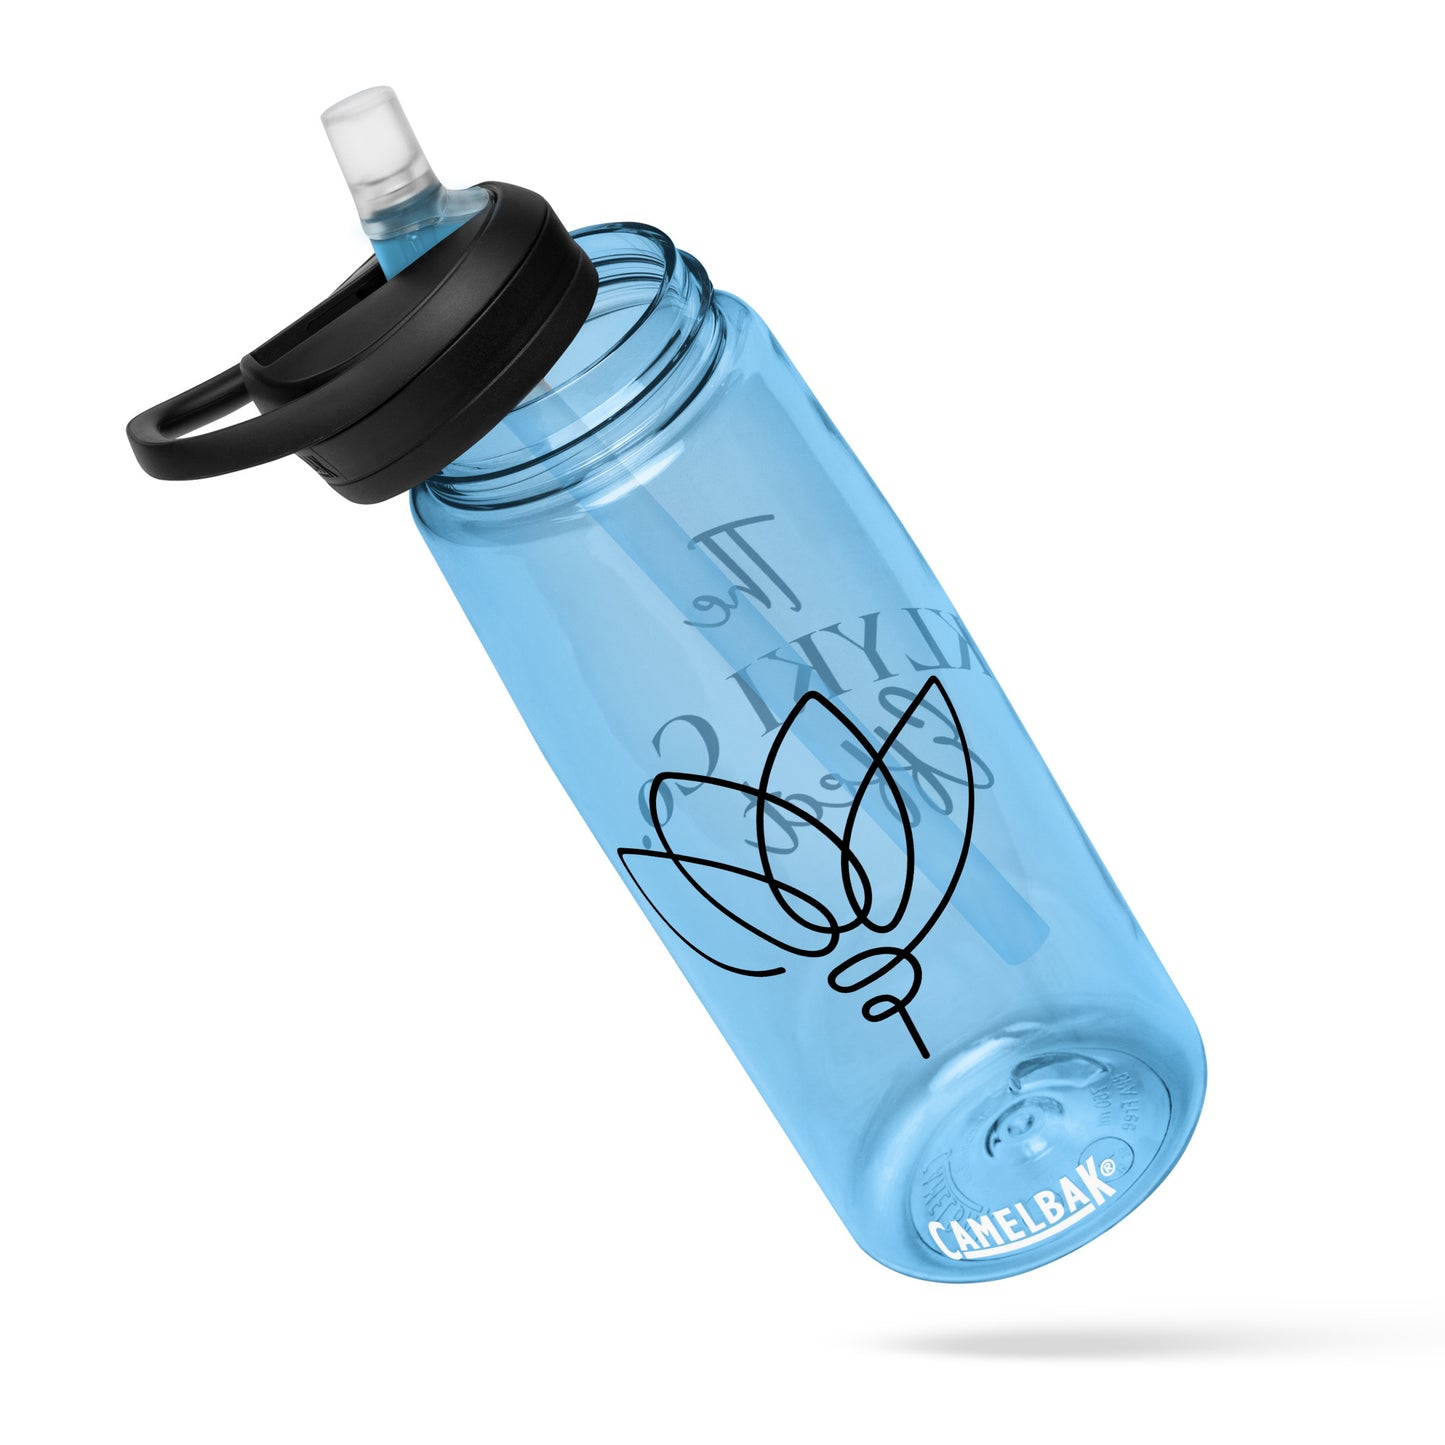 Lotus Sports water bottle